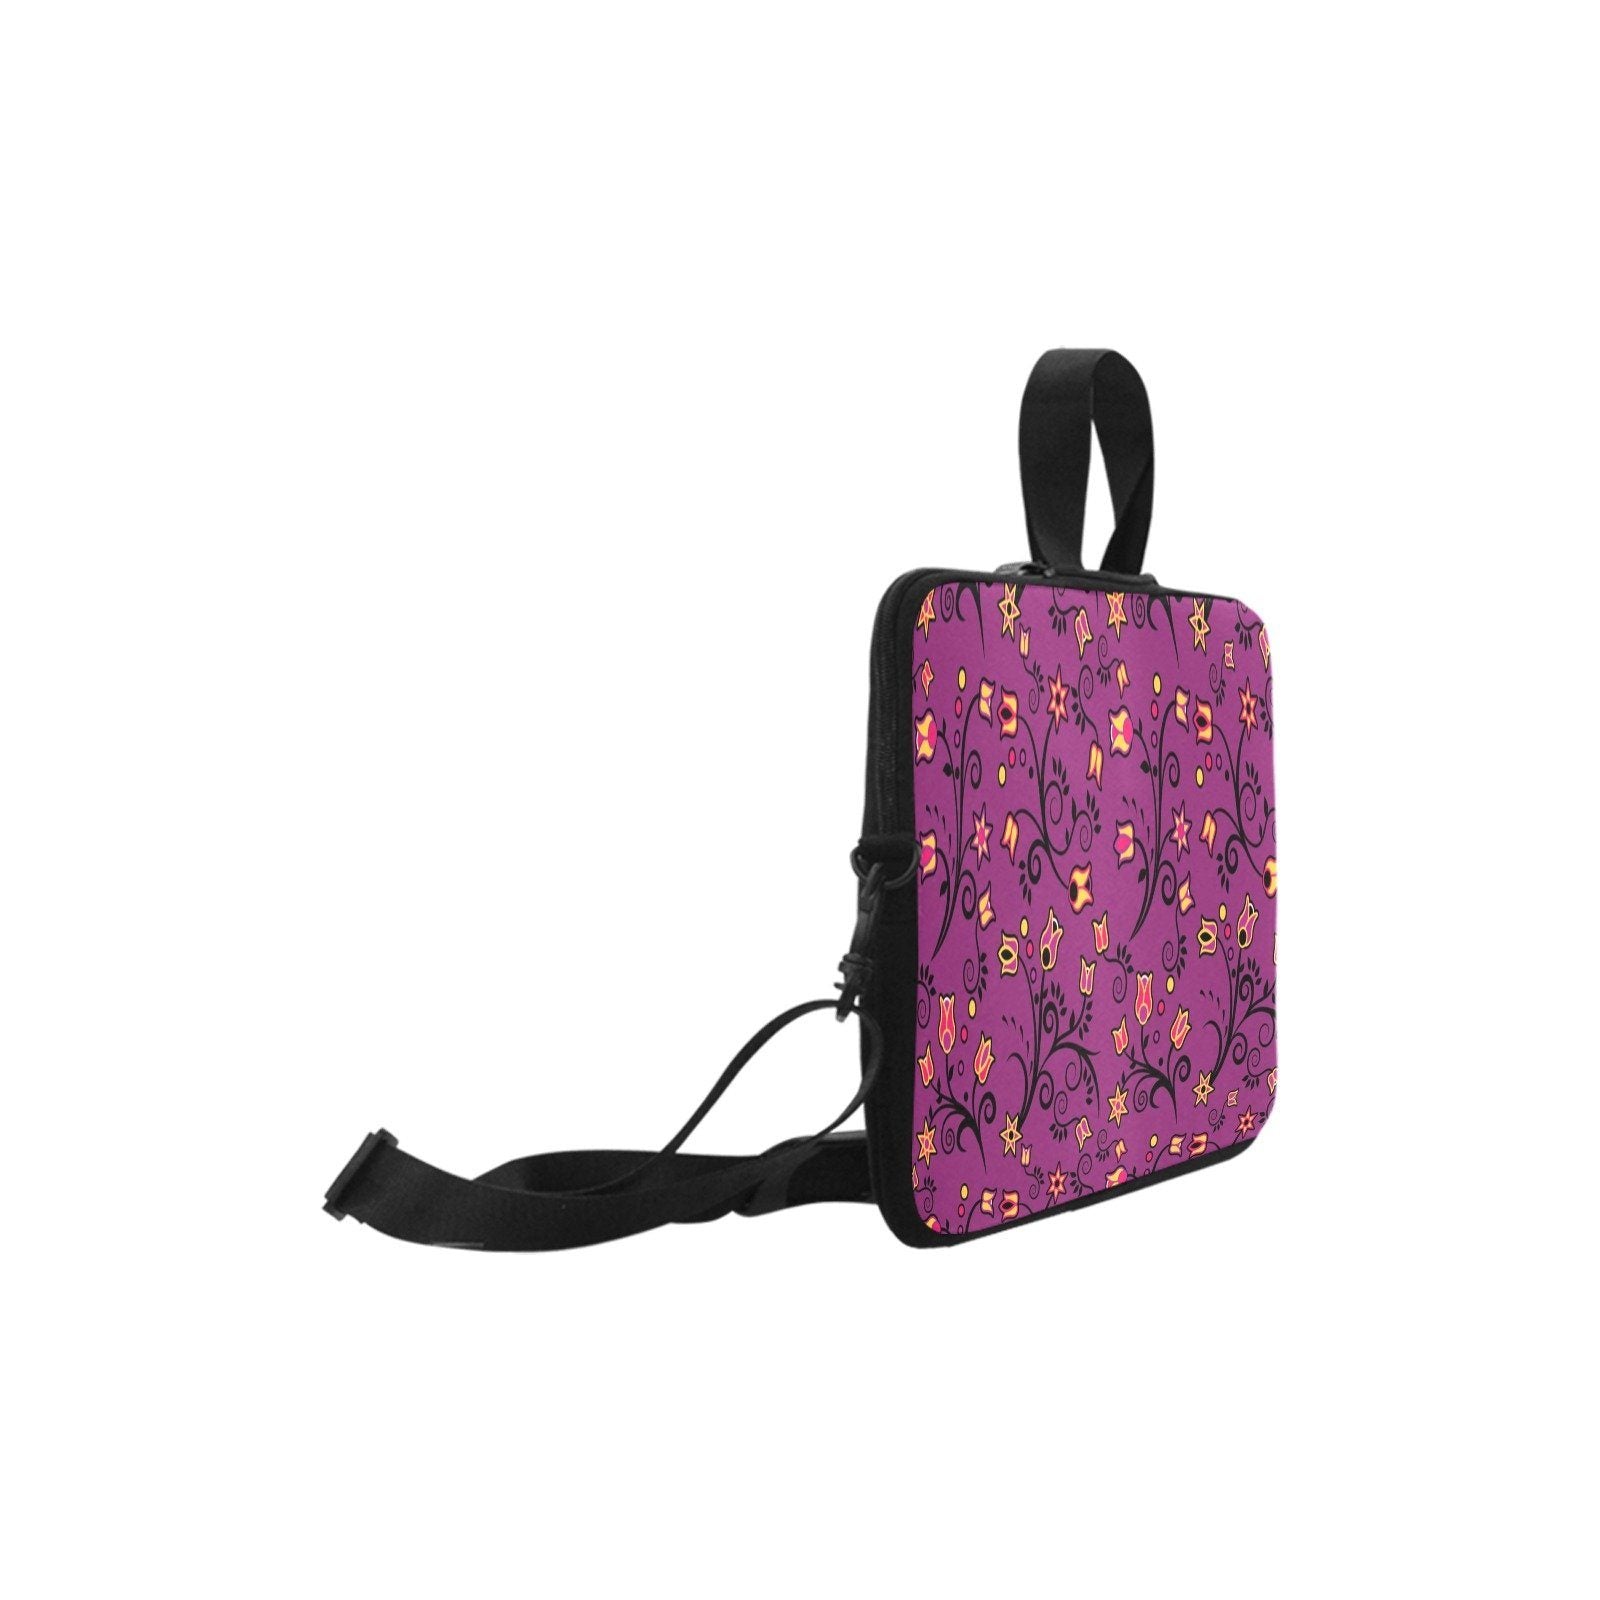 Lollipop Star Laptop Handbags 15" Laptop Handbags 15" e-joyer 